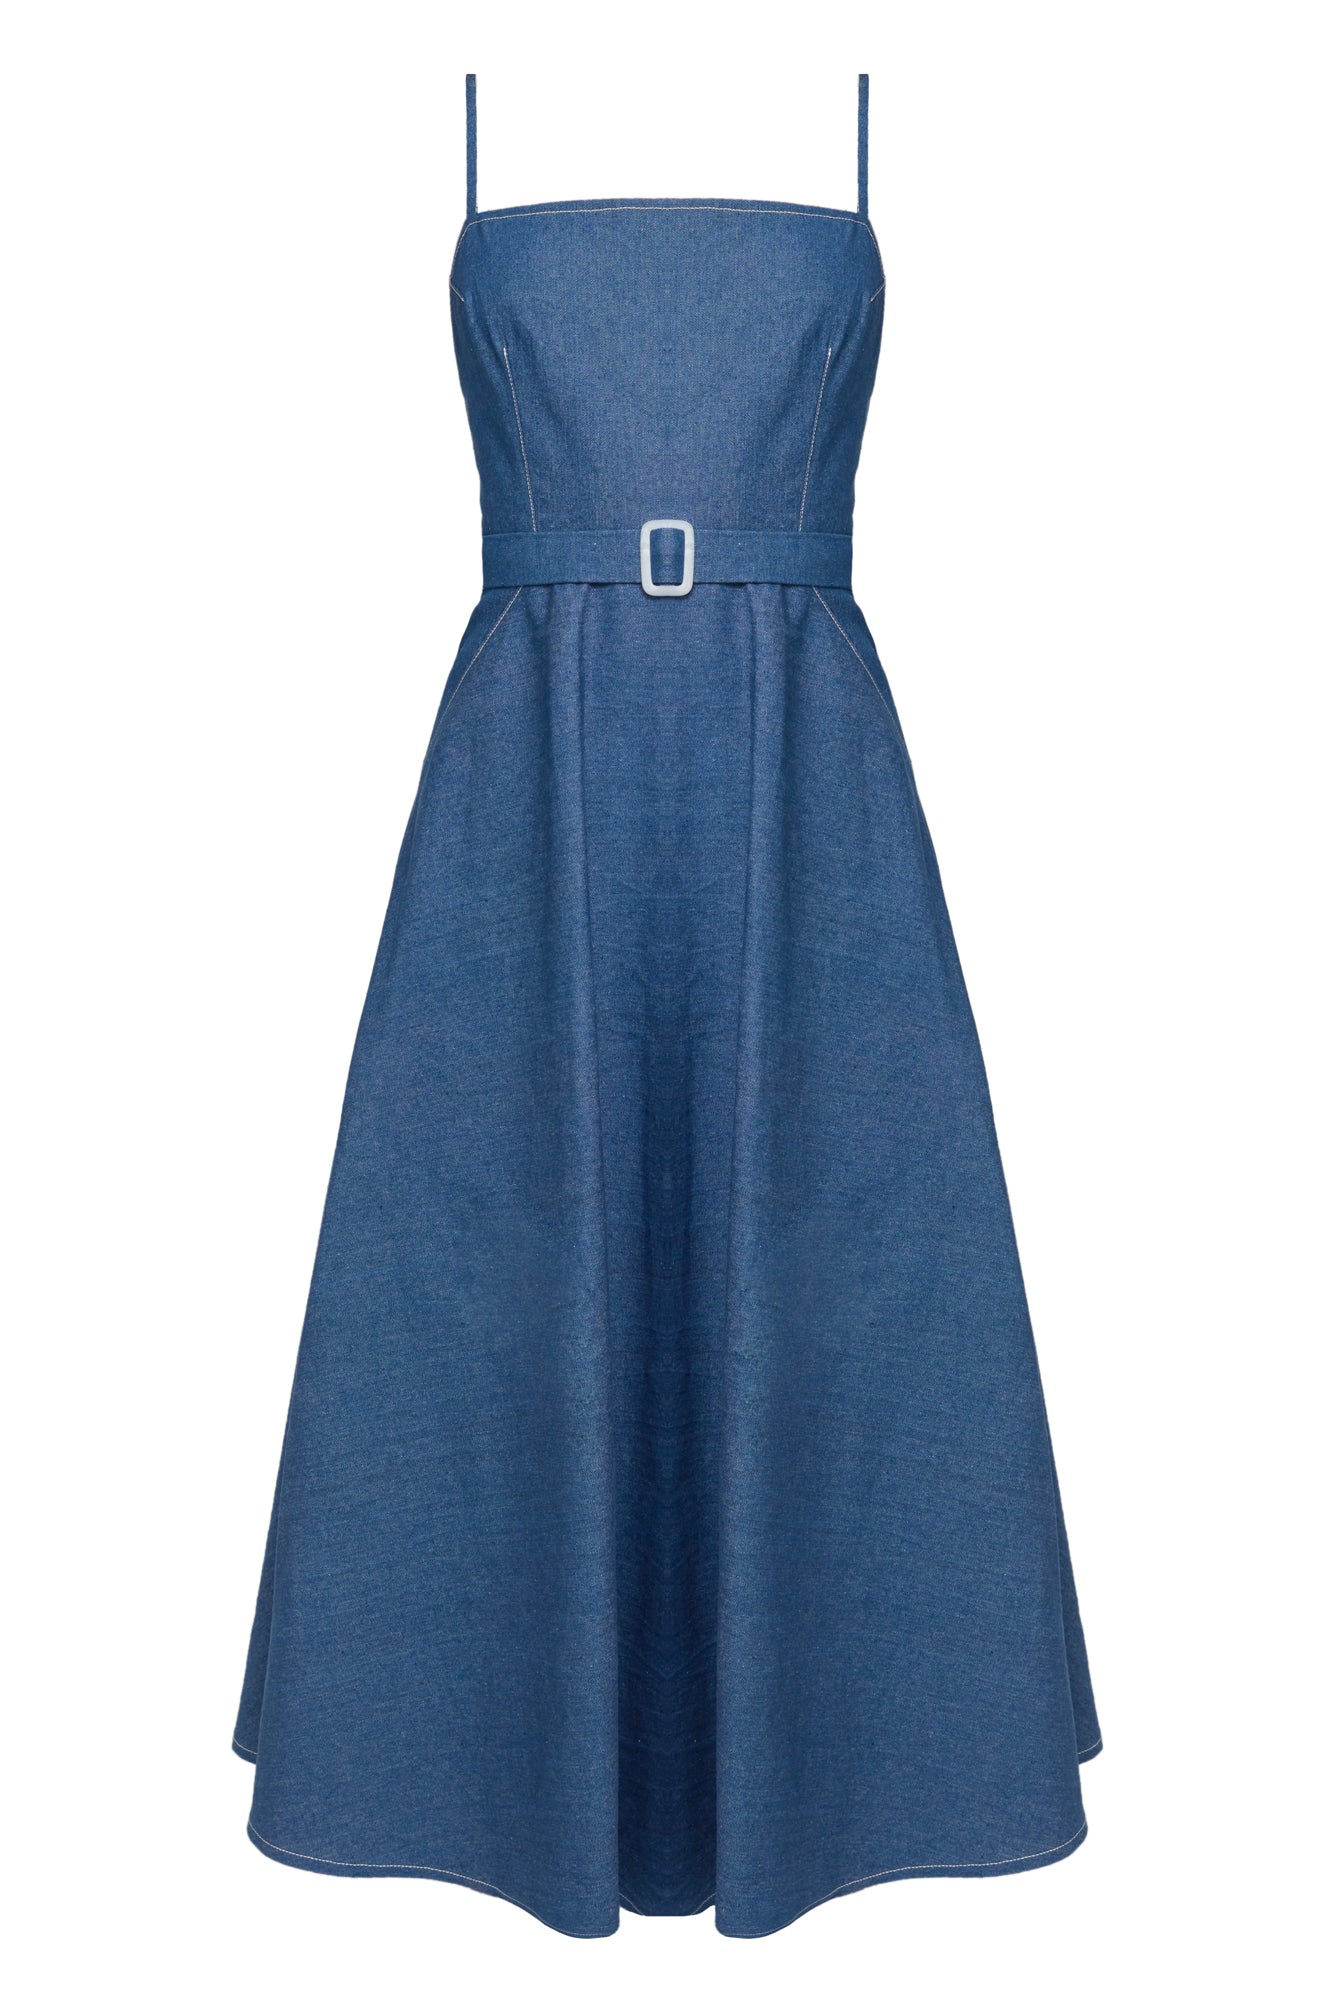 Women’s Matissa Blue Denim Dress With Retro Circle Skirt Extra Small Undress